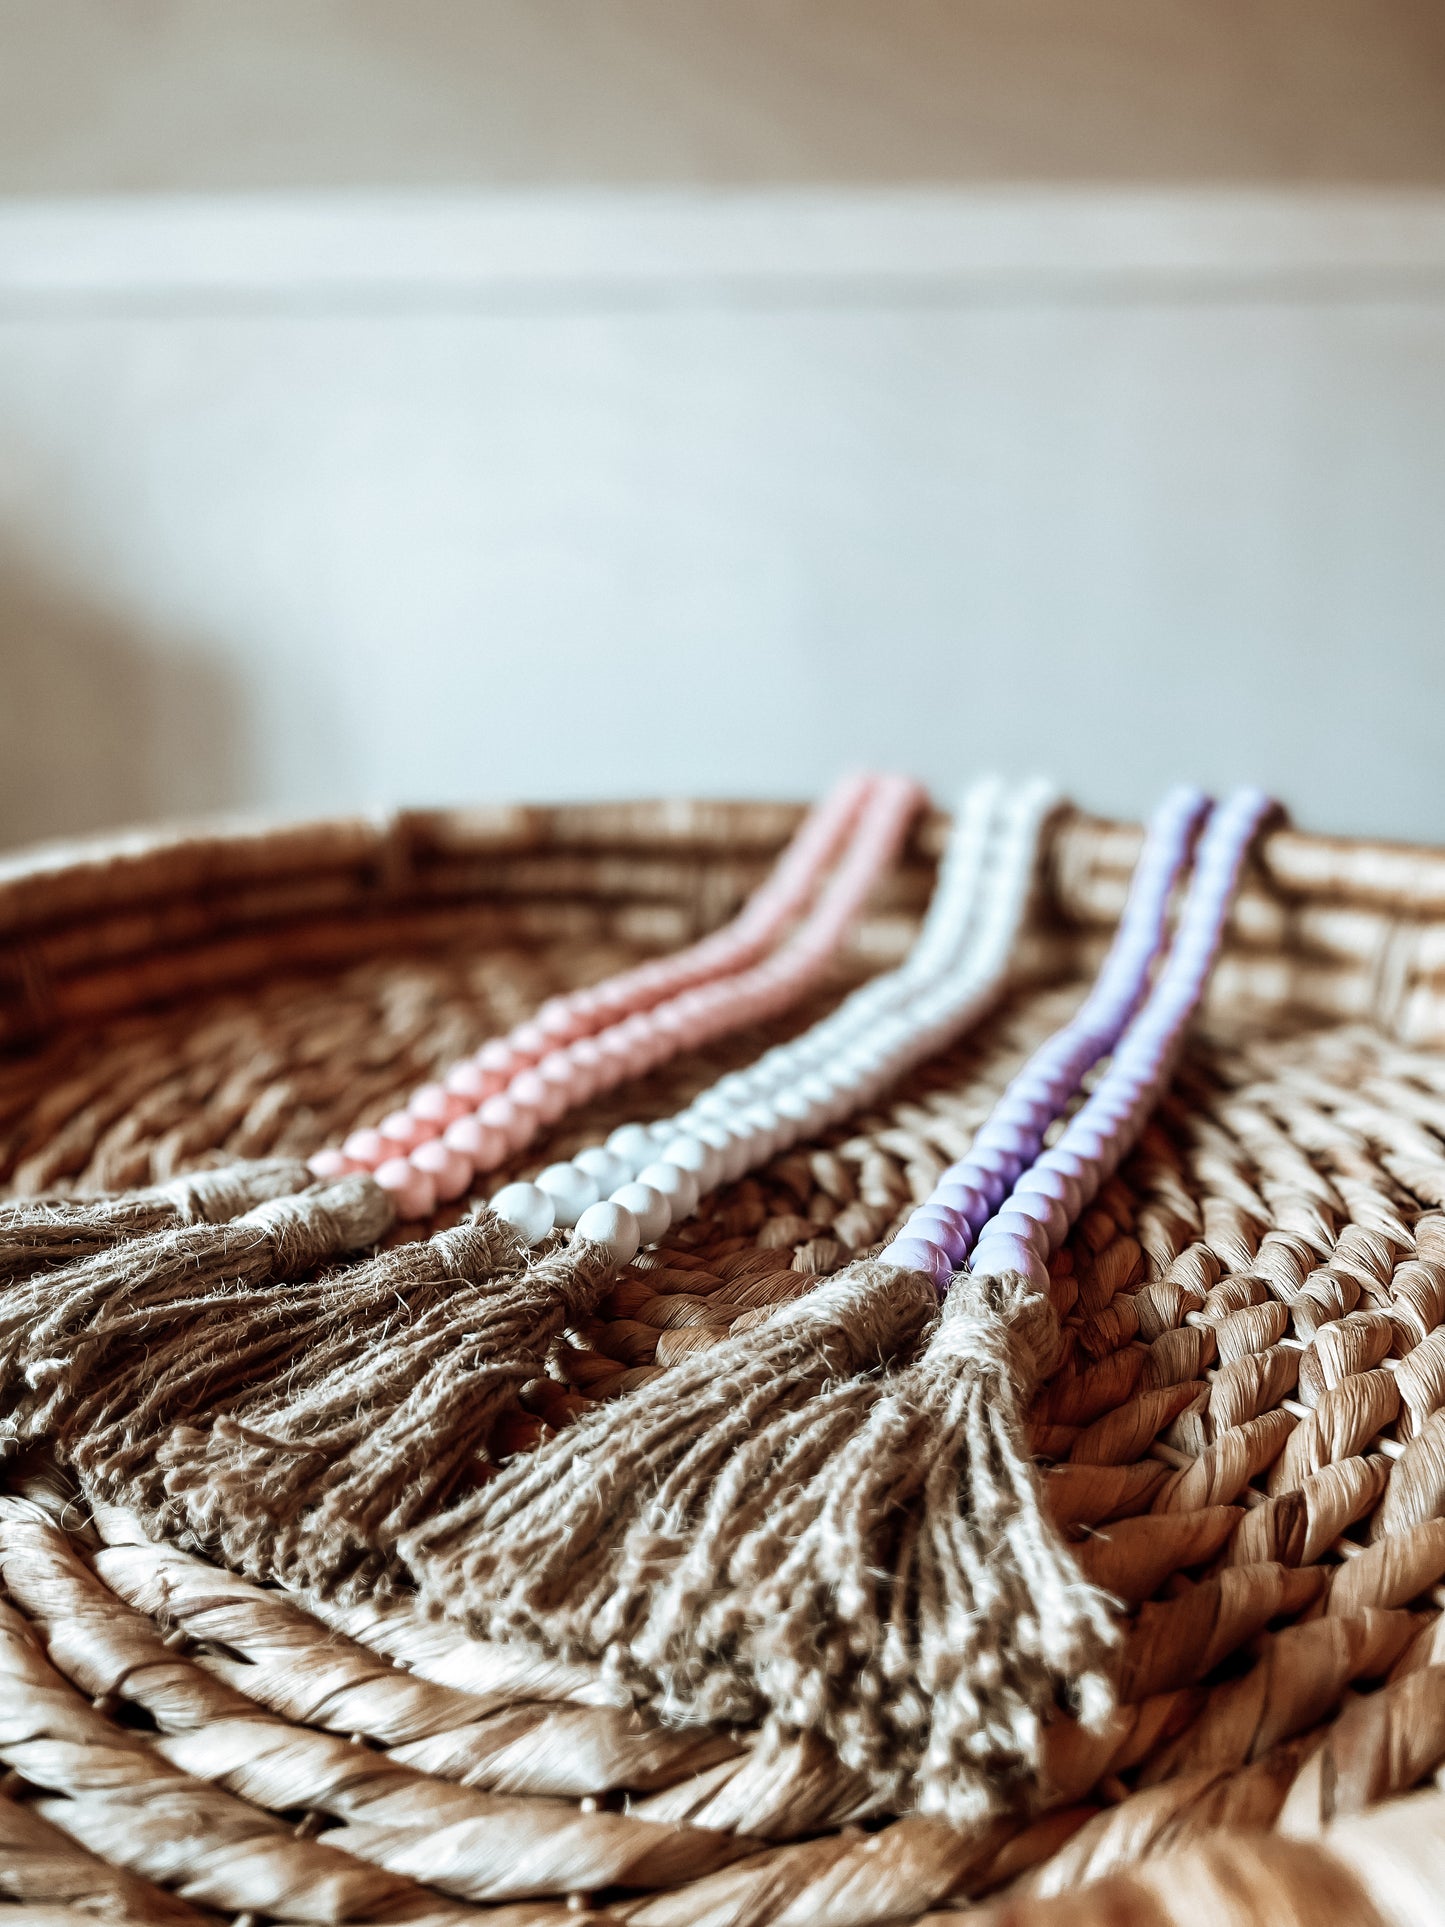 Pastel wooden beaded garlands with jute tassels